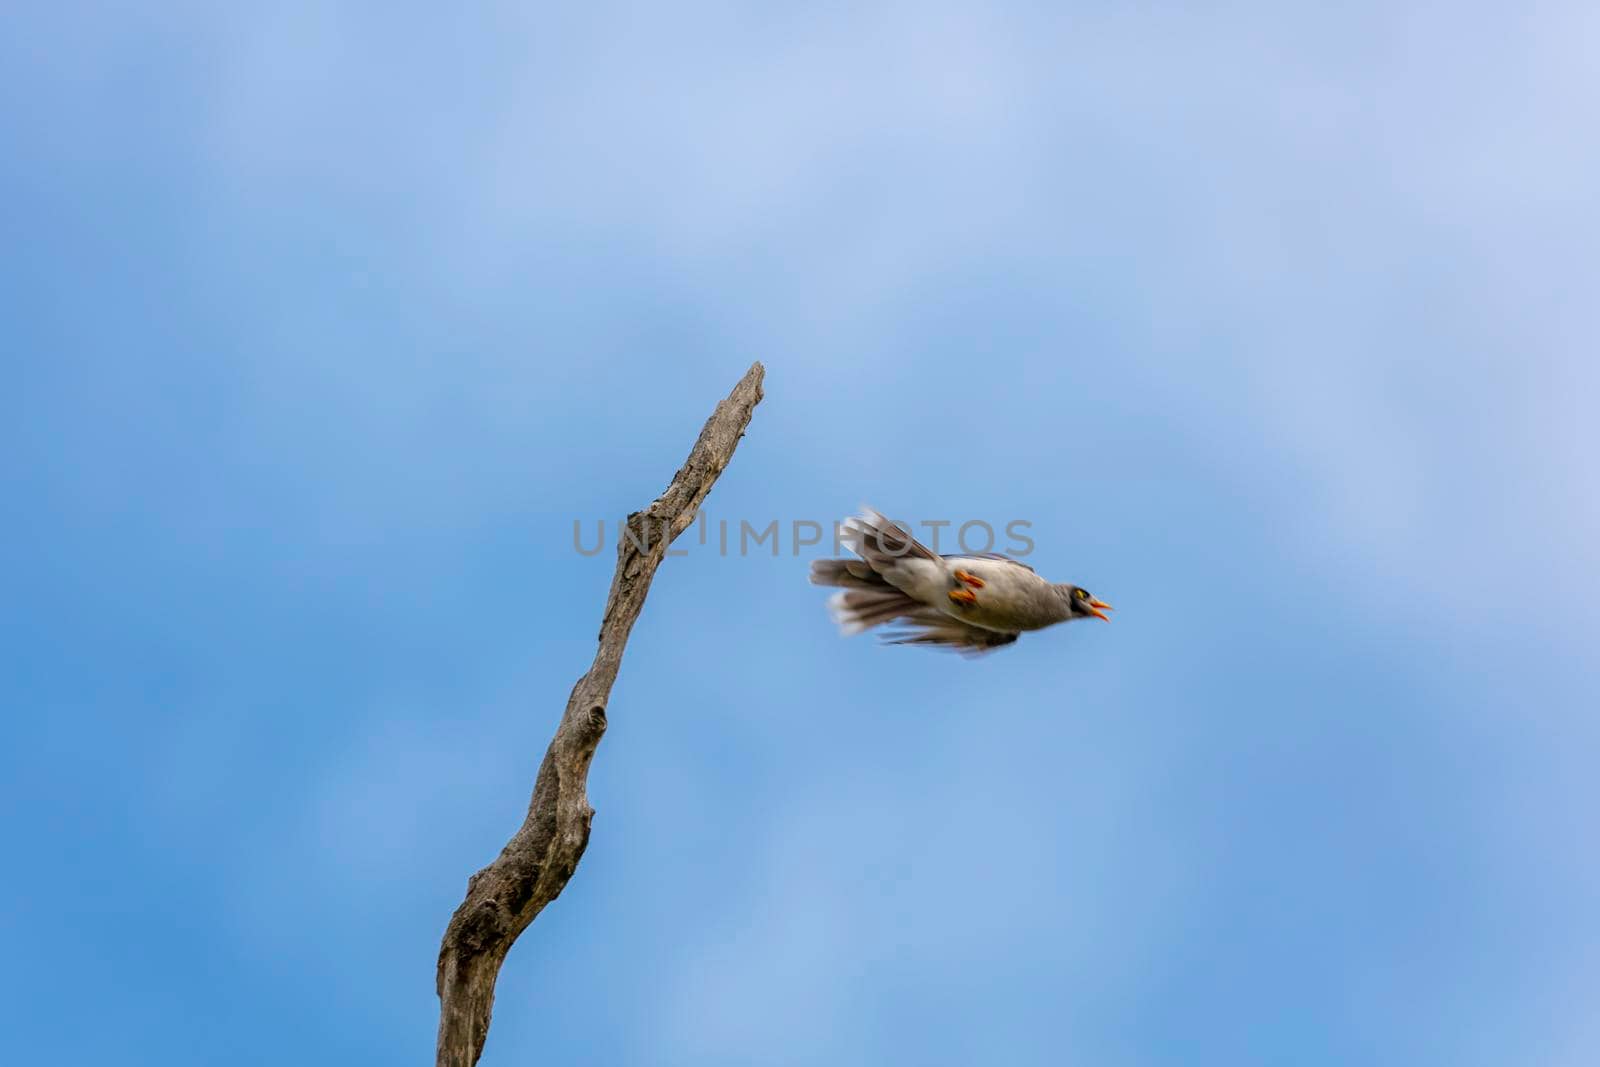 A wild bird flying from a dead tree branch in regional Australia by WittkePhotos